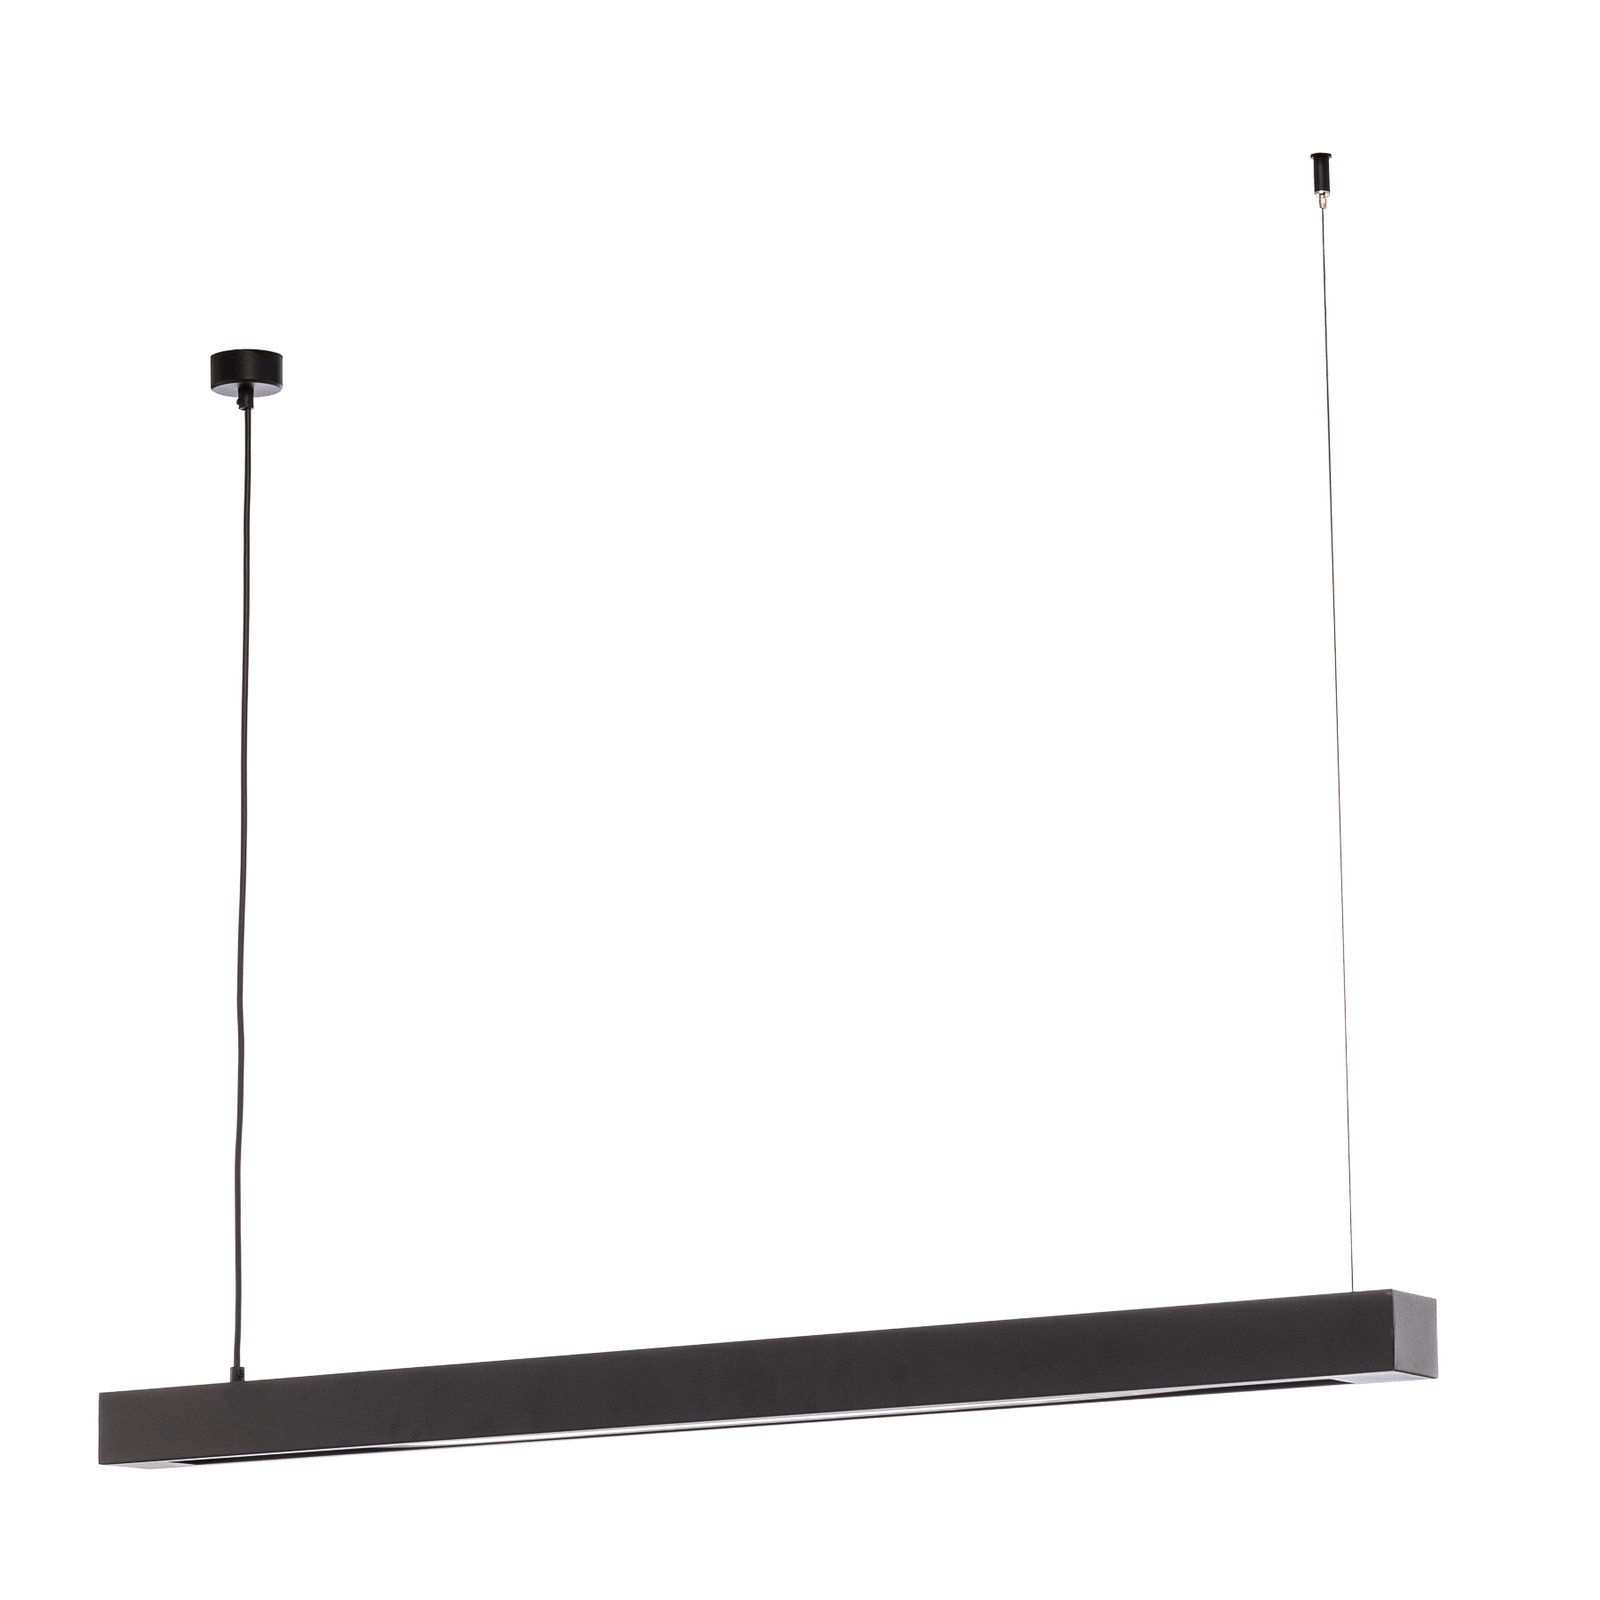 Candeeiro suspenso Lungo, preto, comprimento 124 cm